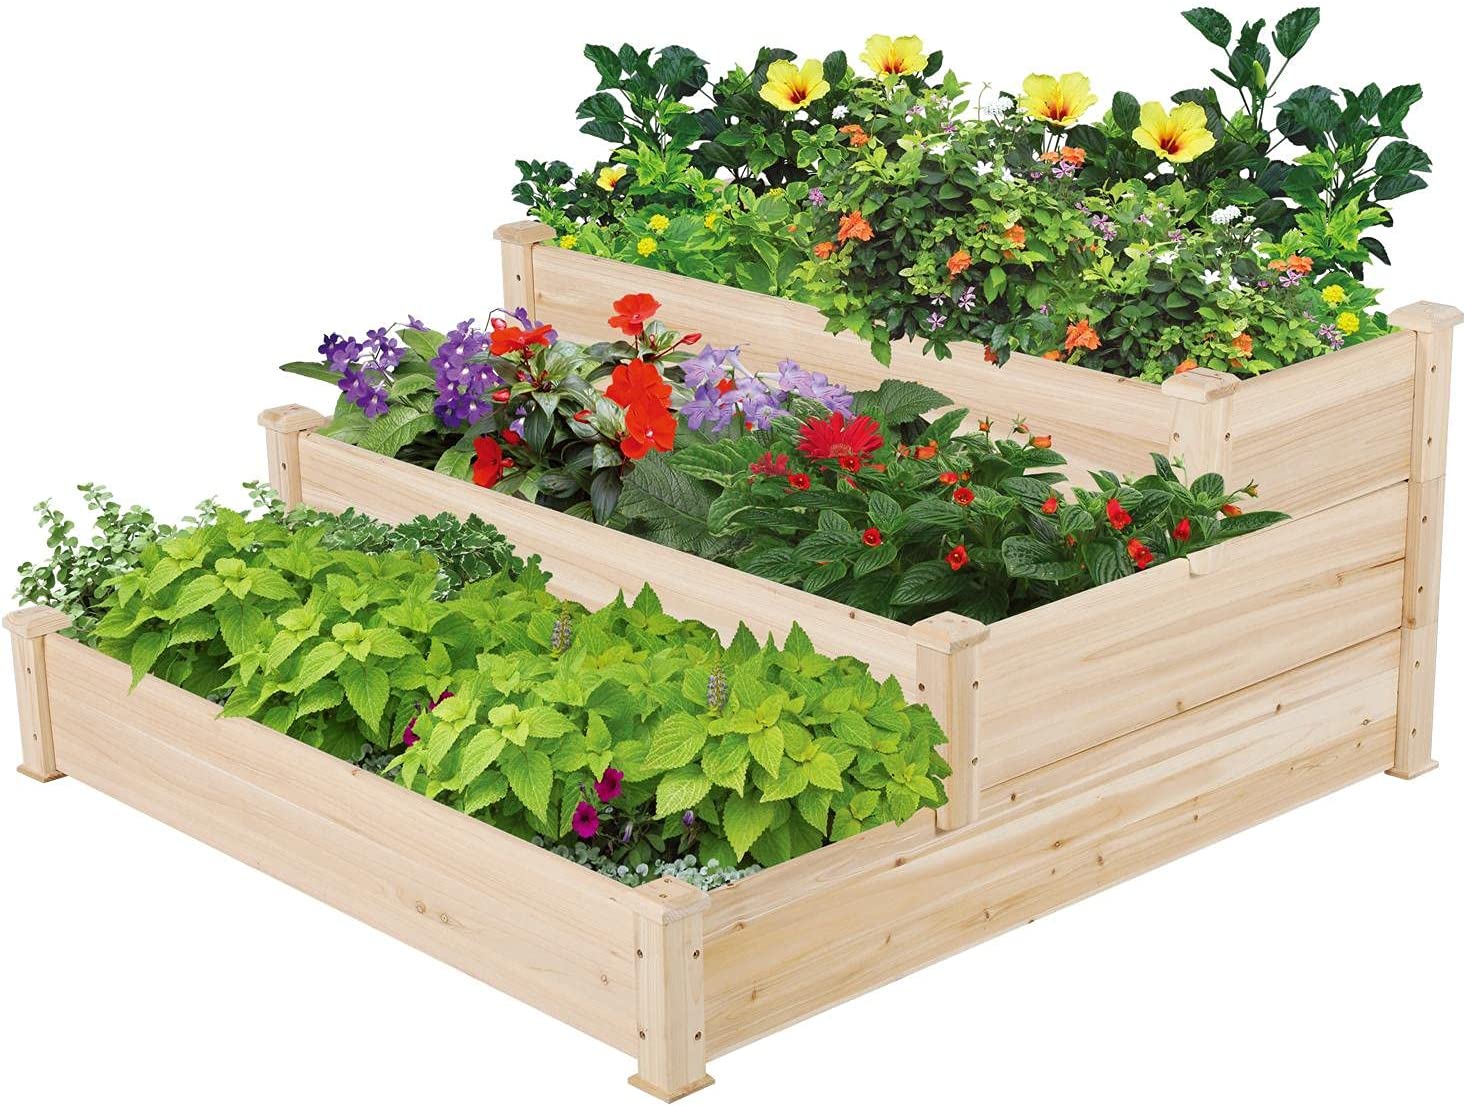 Wood tiered raised garden bed